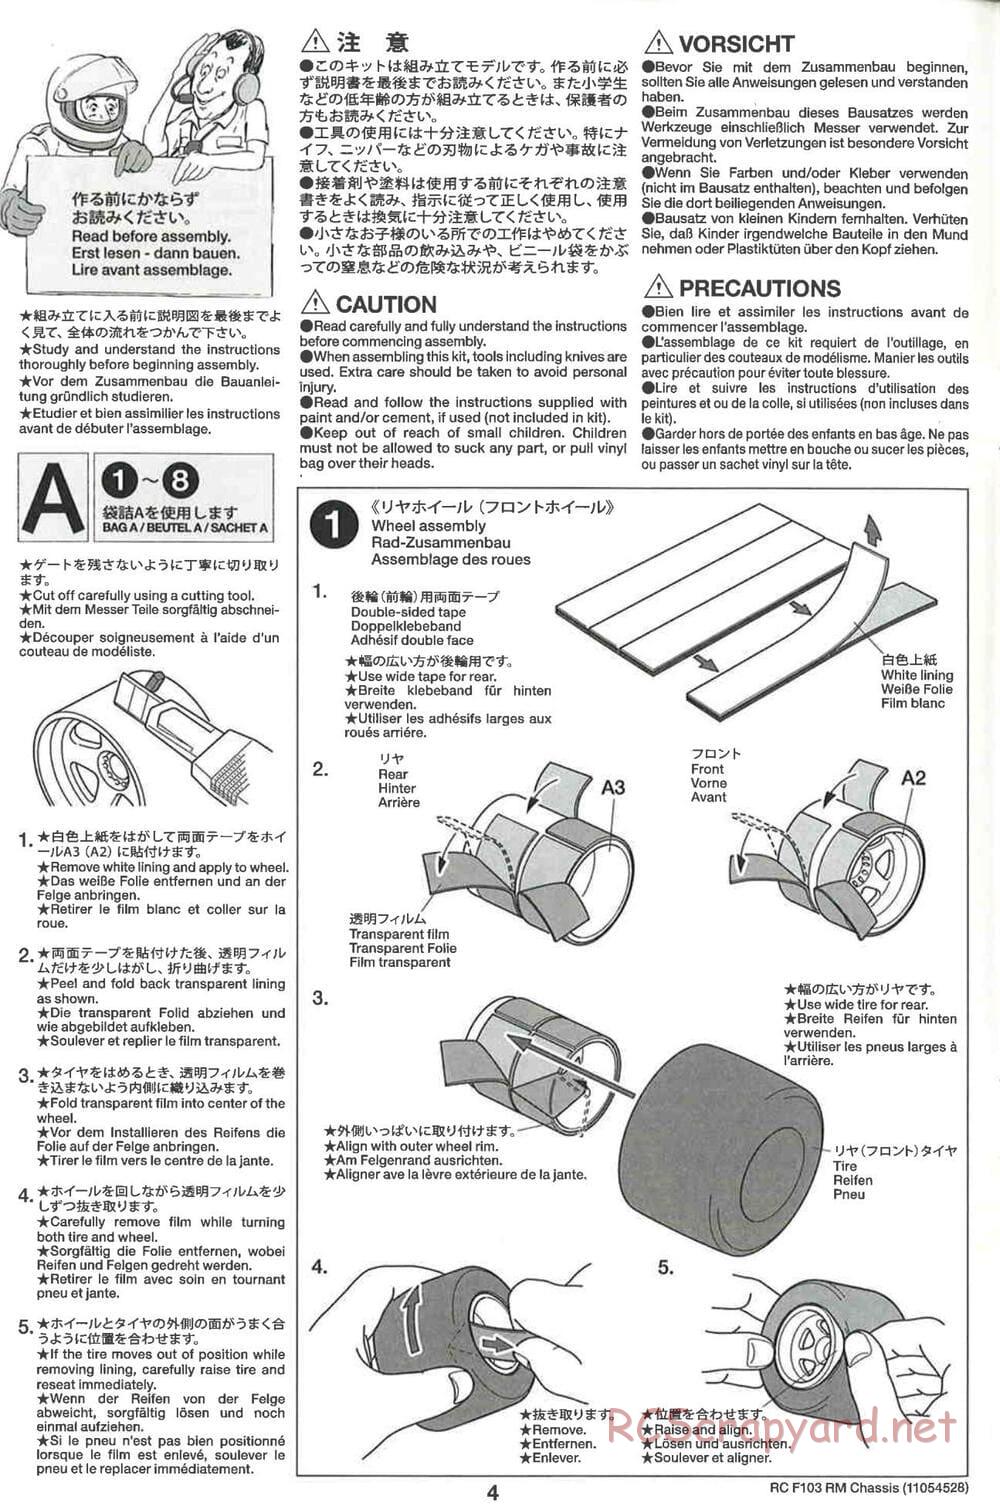 Tamiya - F103RM Chassis - Manual - Page 4